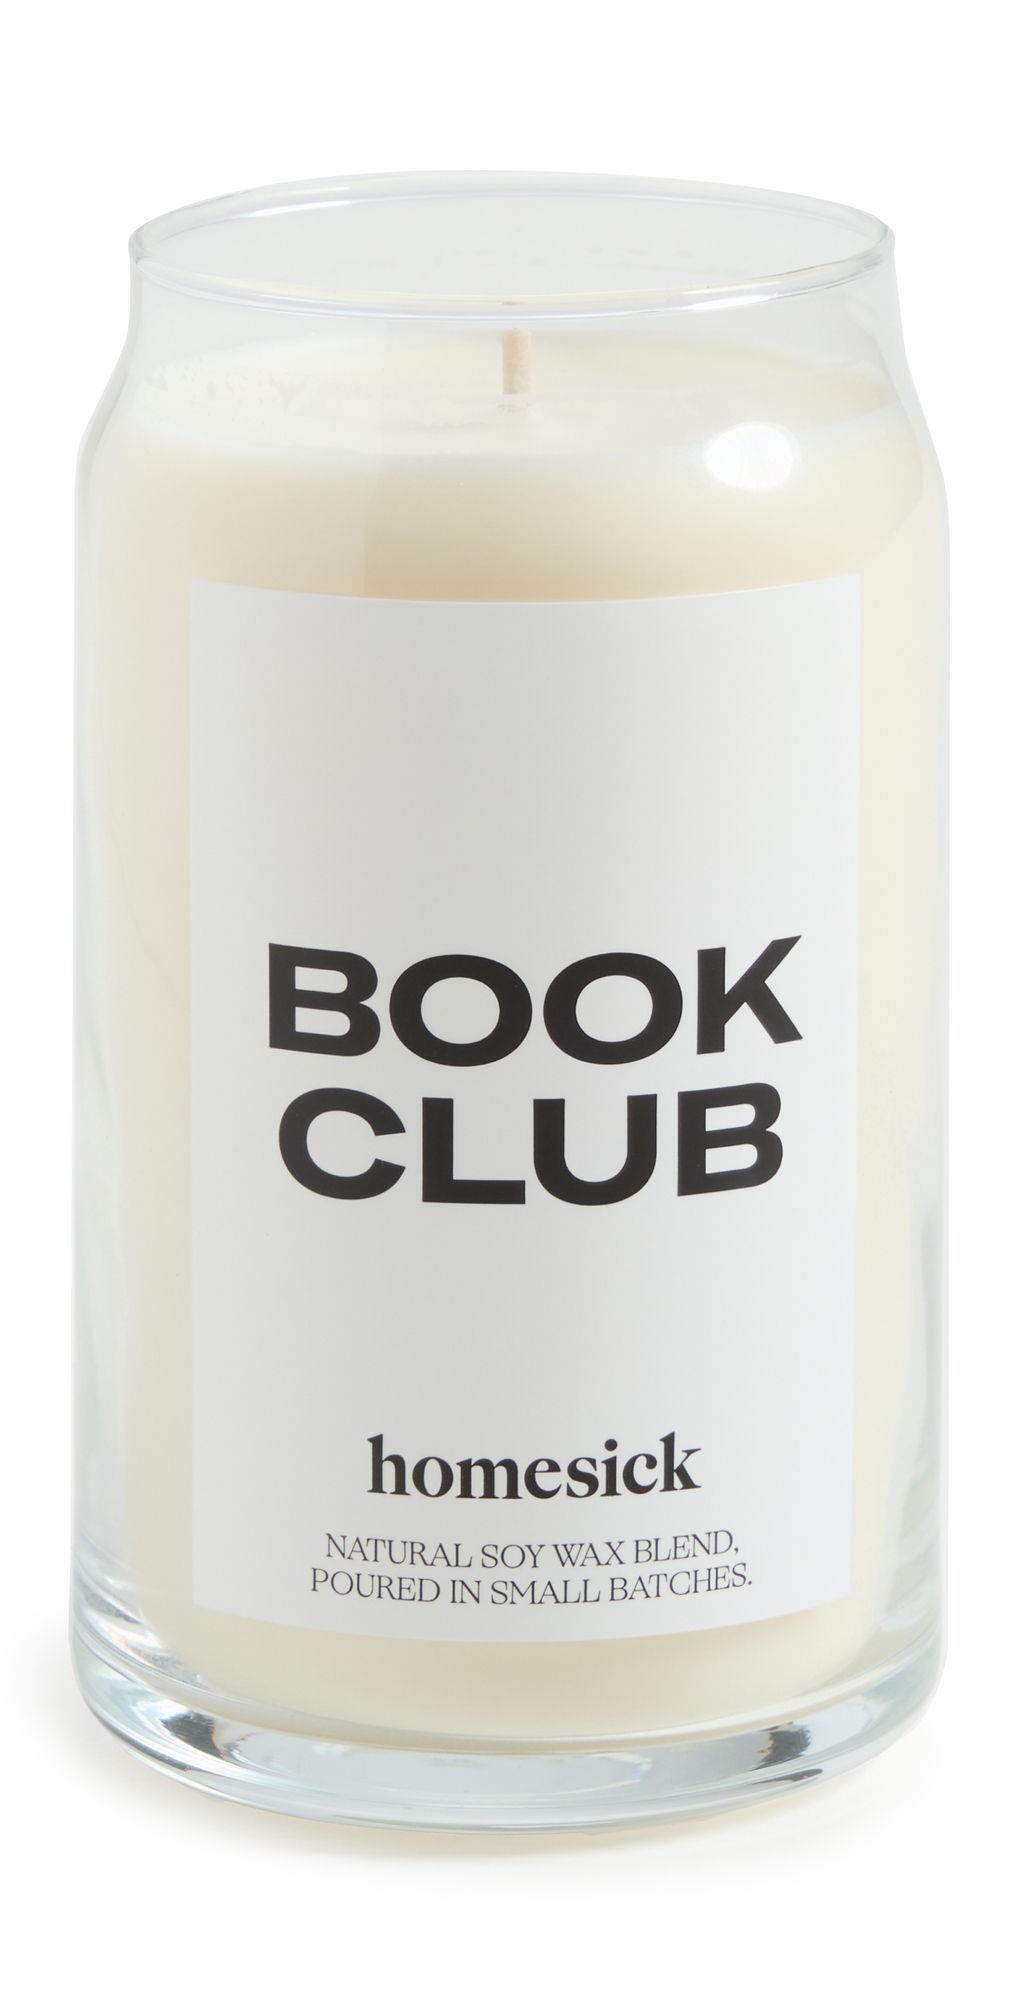 Homesick Book Club Candle | Shopbop